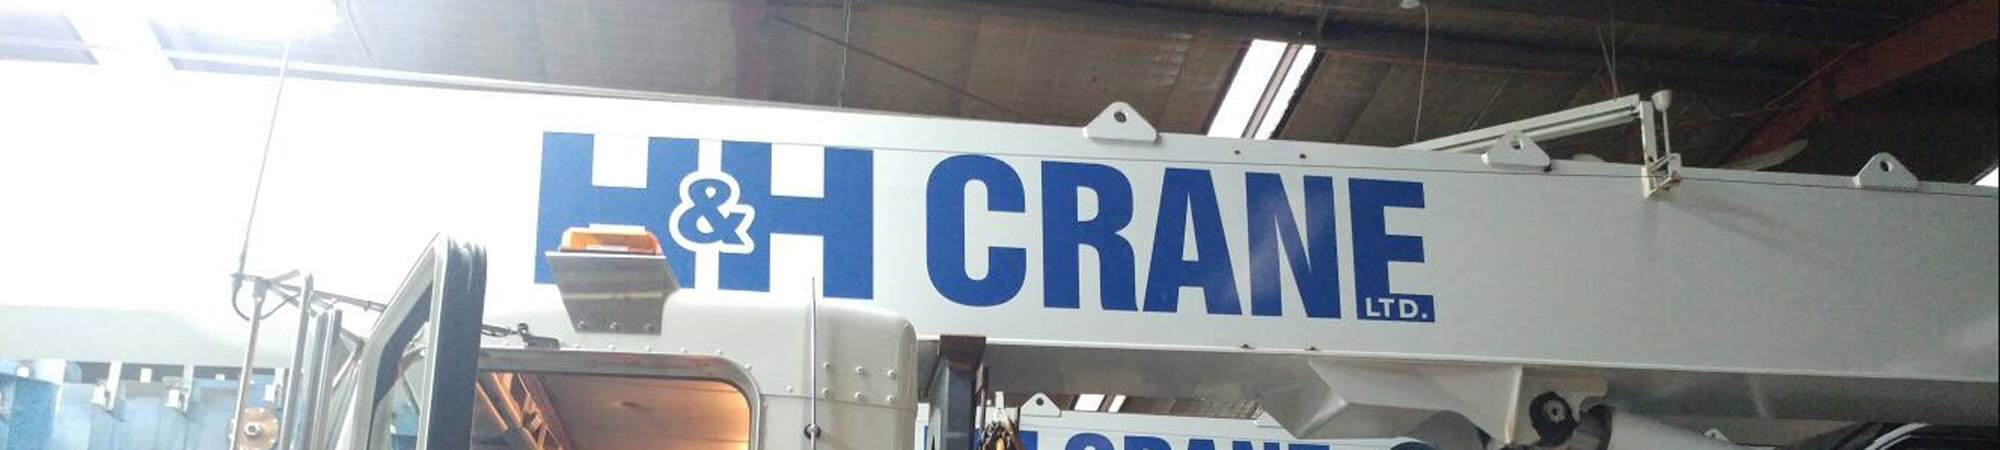 H&H Crane Ltd Truck with Logo